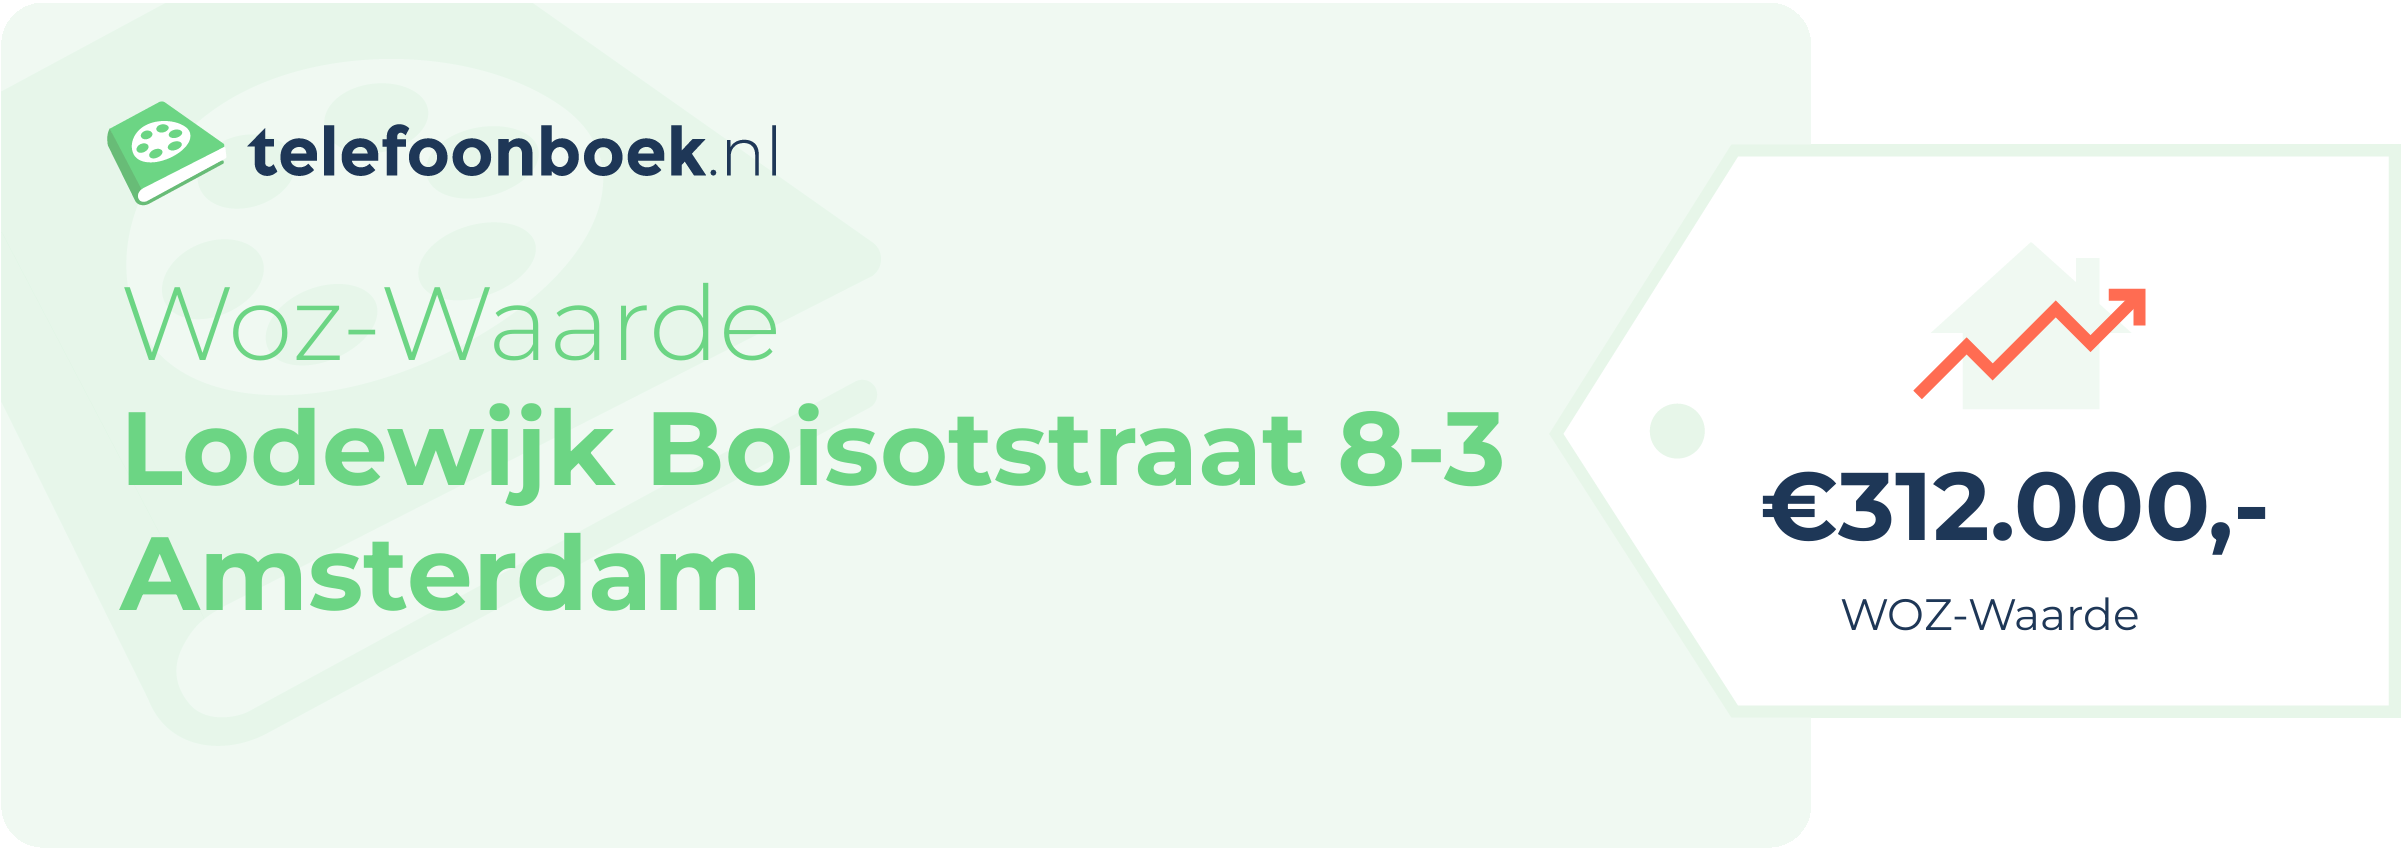 WOZ-waarde Lodewijk Boisotstraat 8-3 Amsterdam